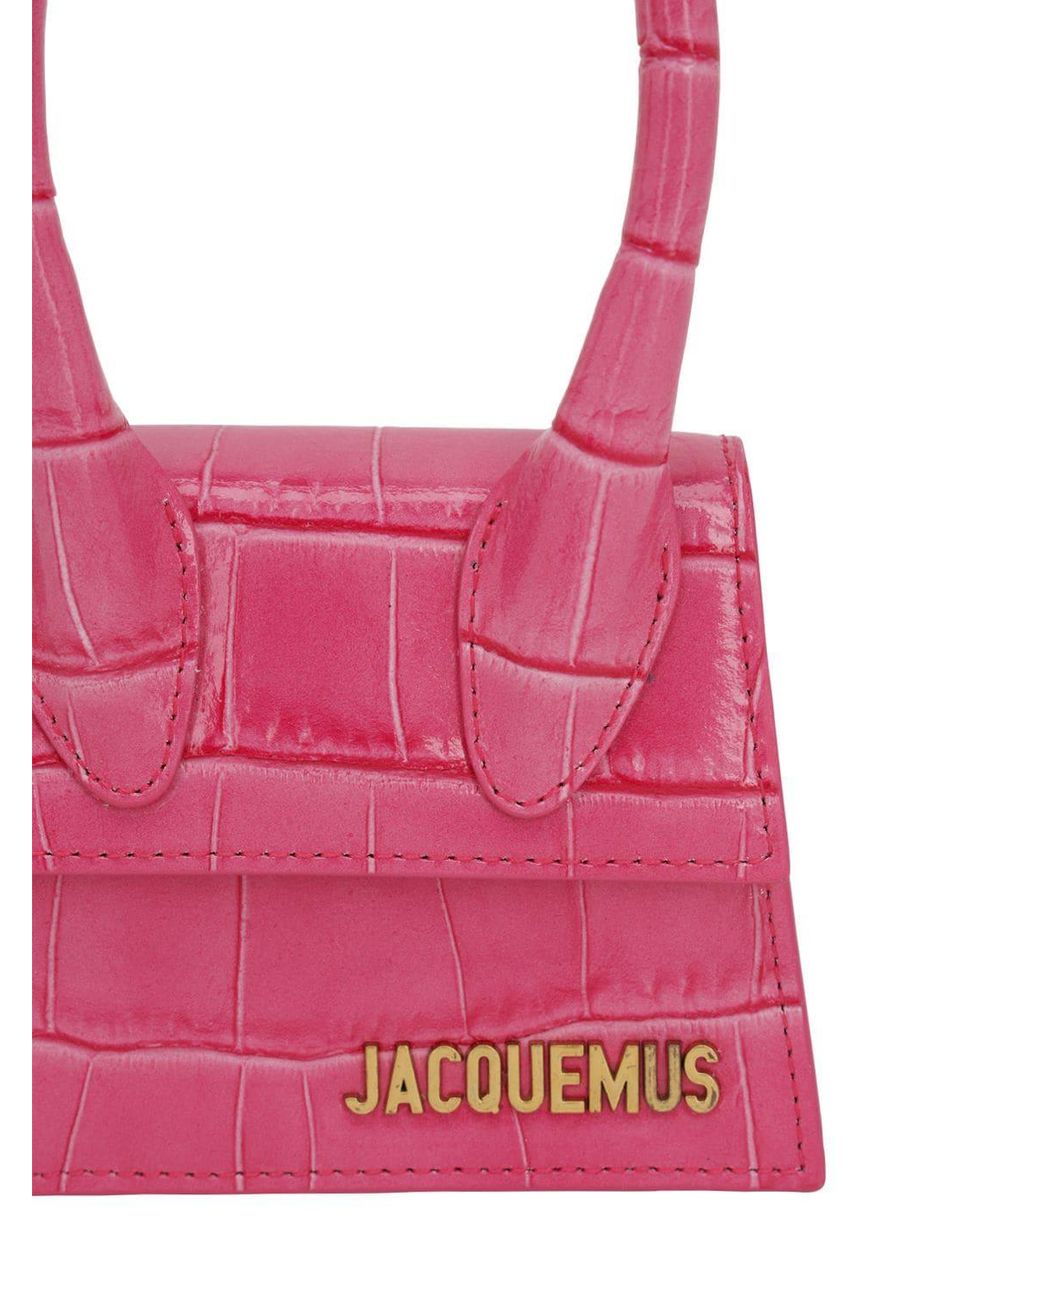 Jacquemus, Bags, Jacquemus Le Chiquito Mini Pink Croc Bag